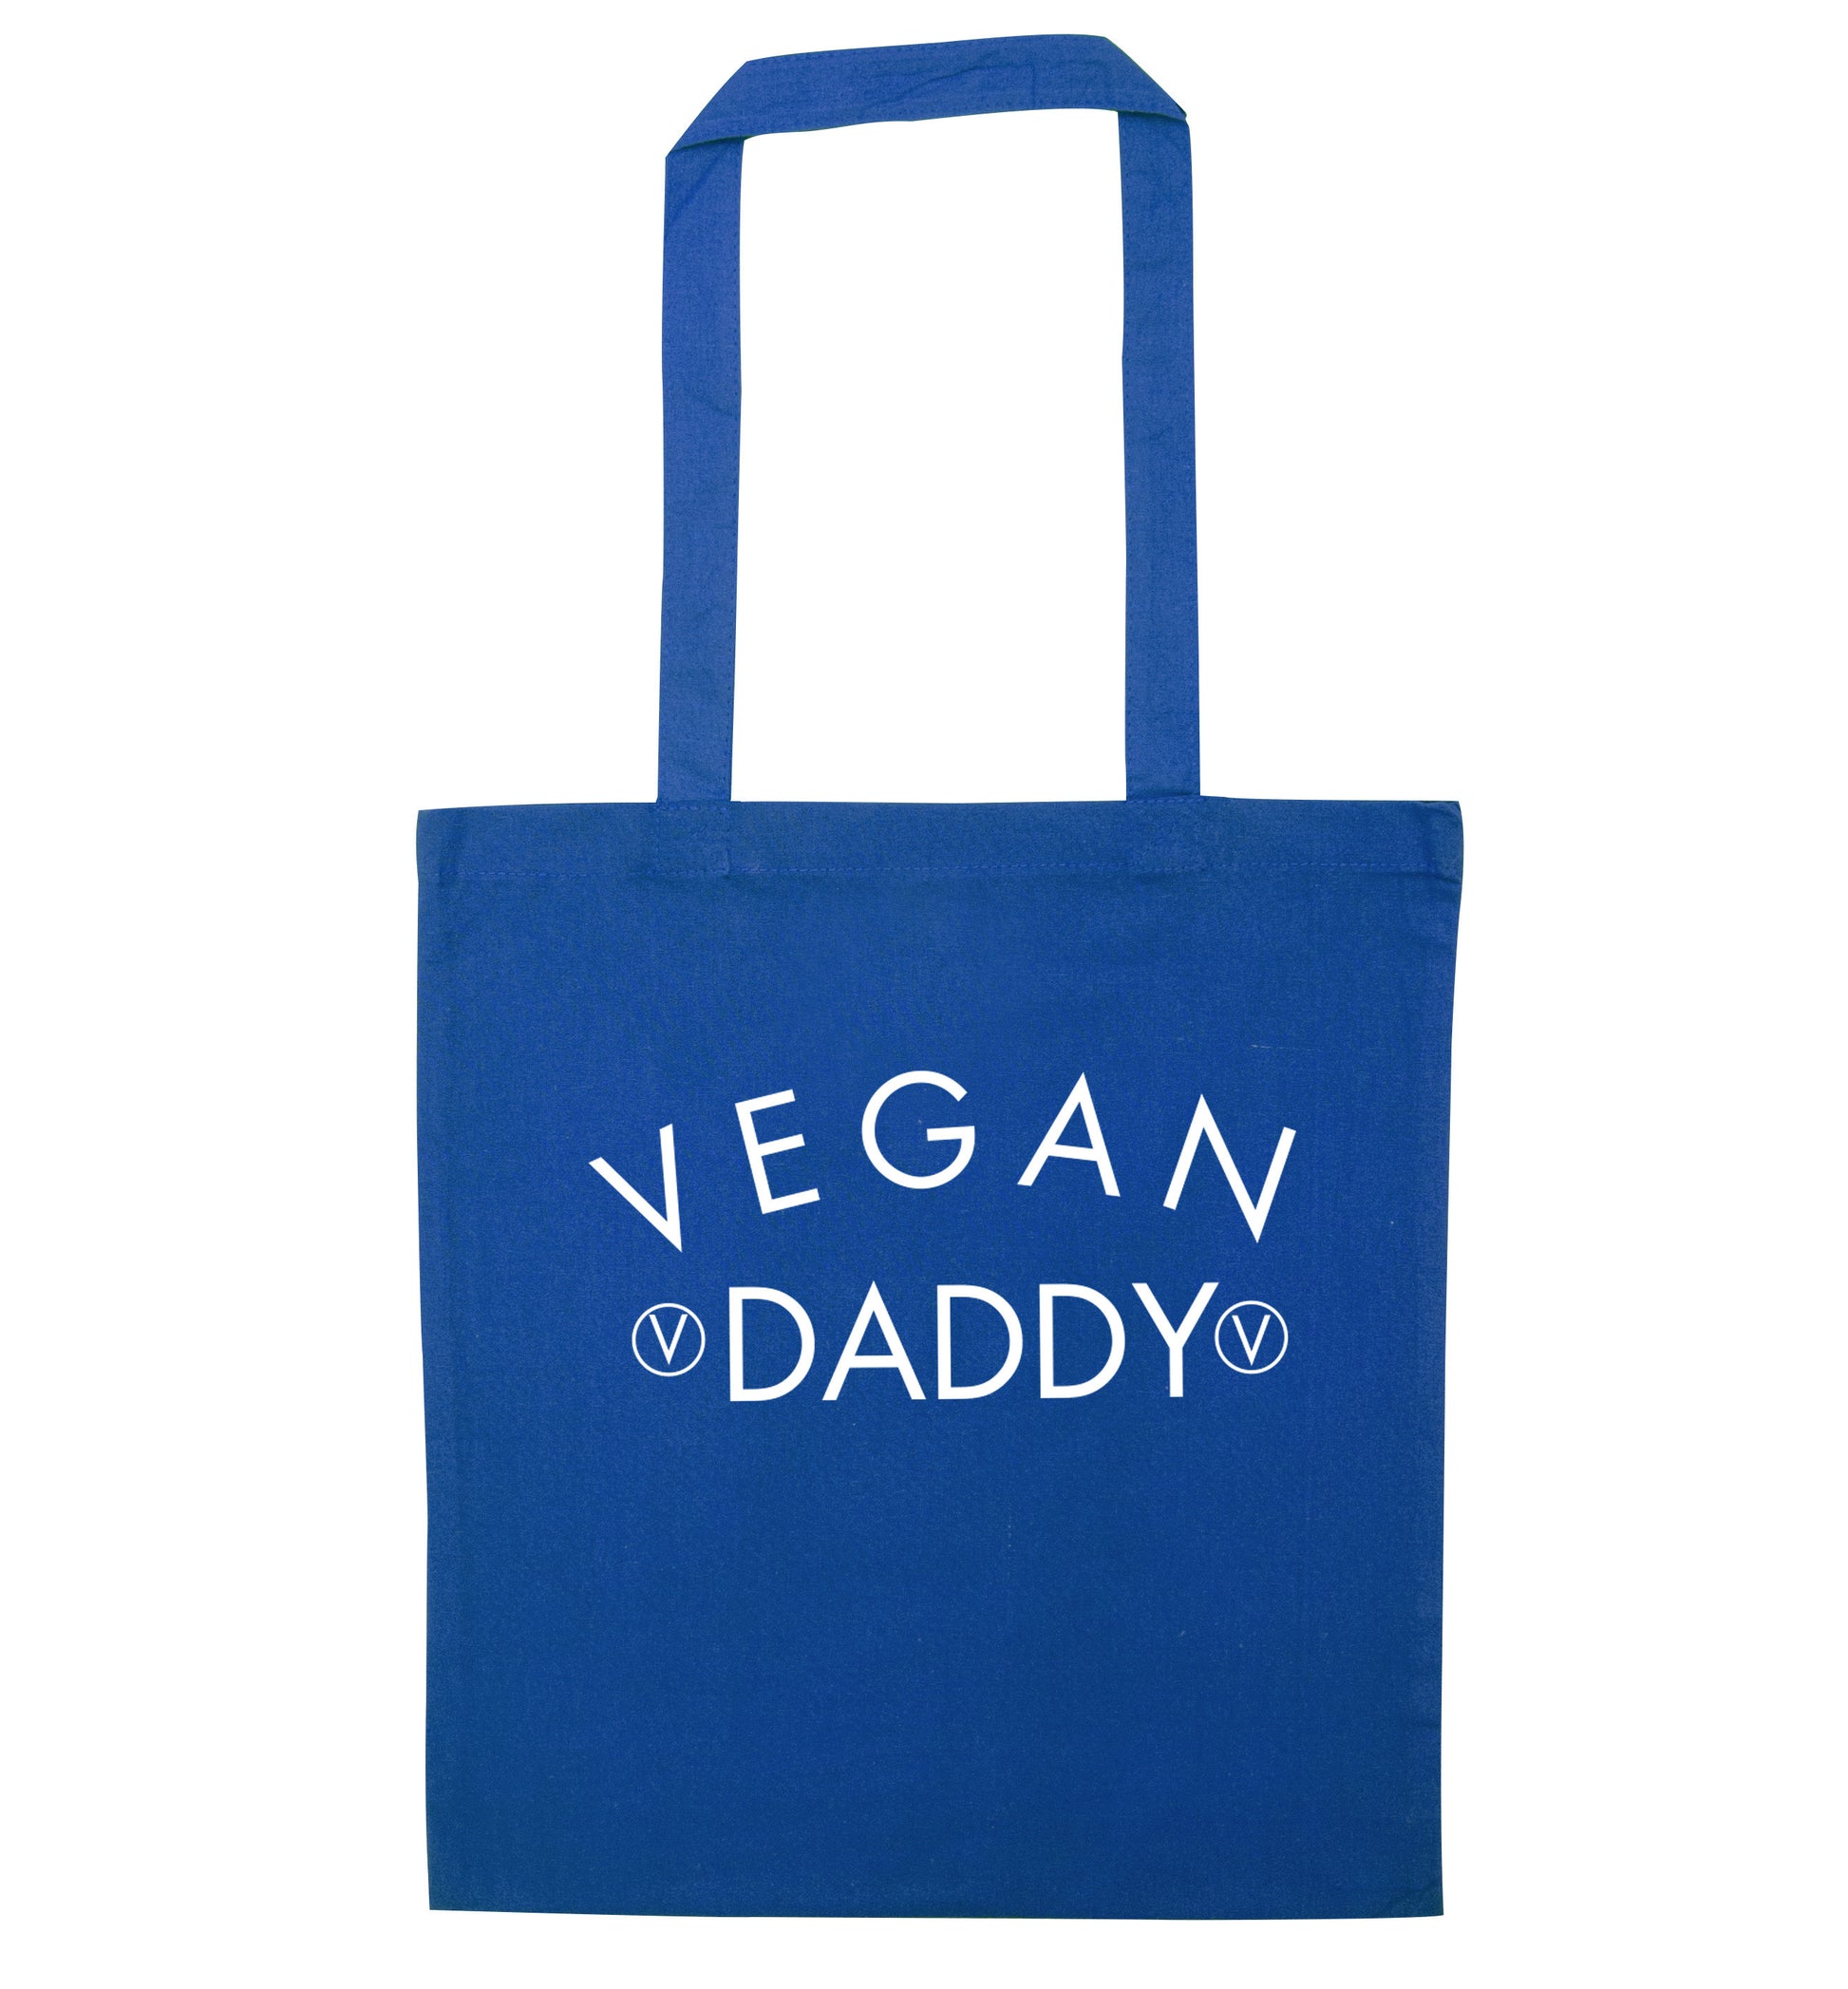 Vegan daddy blue tote bag